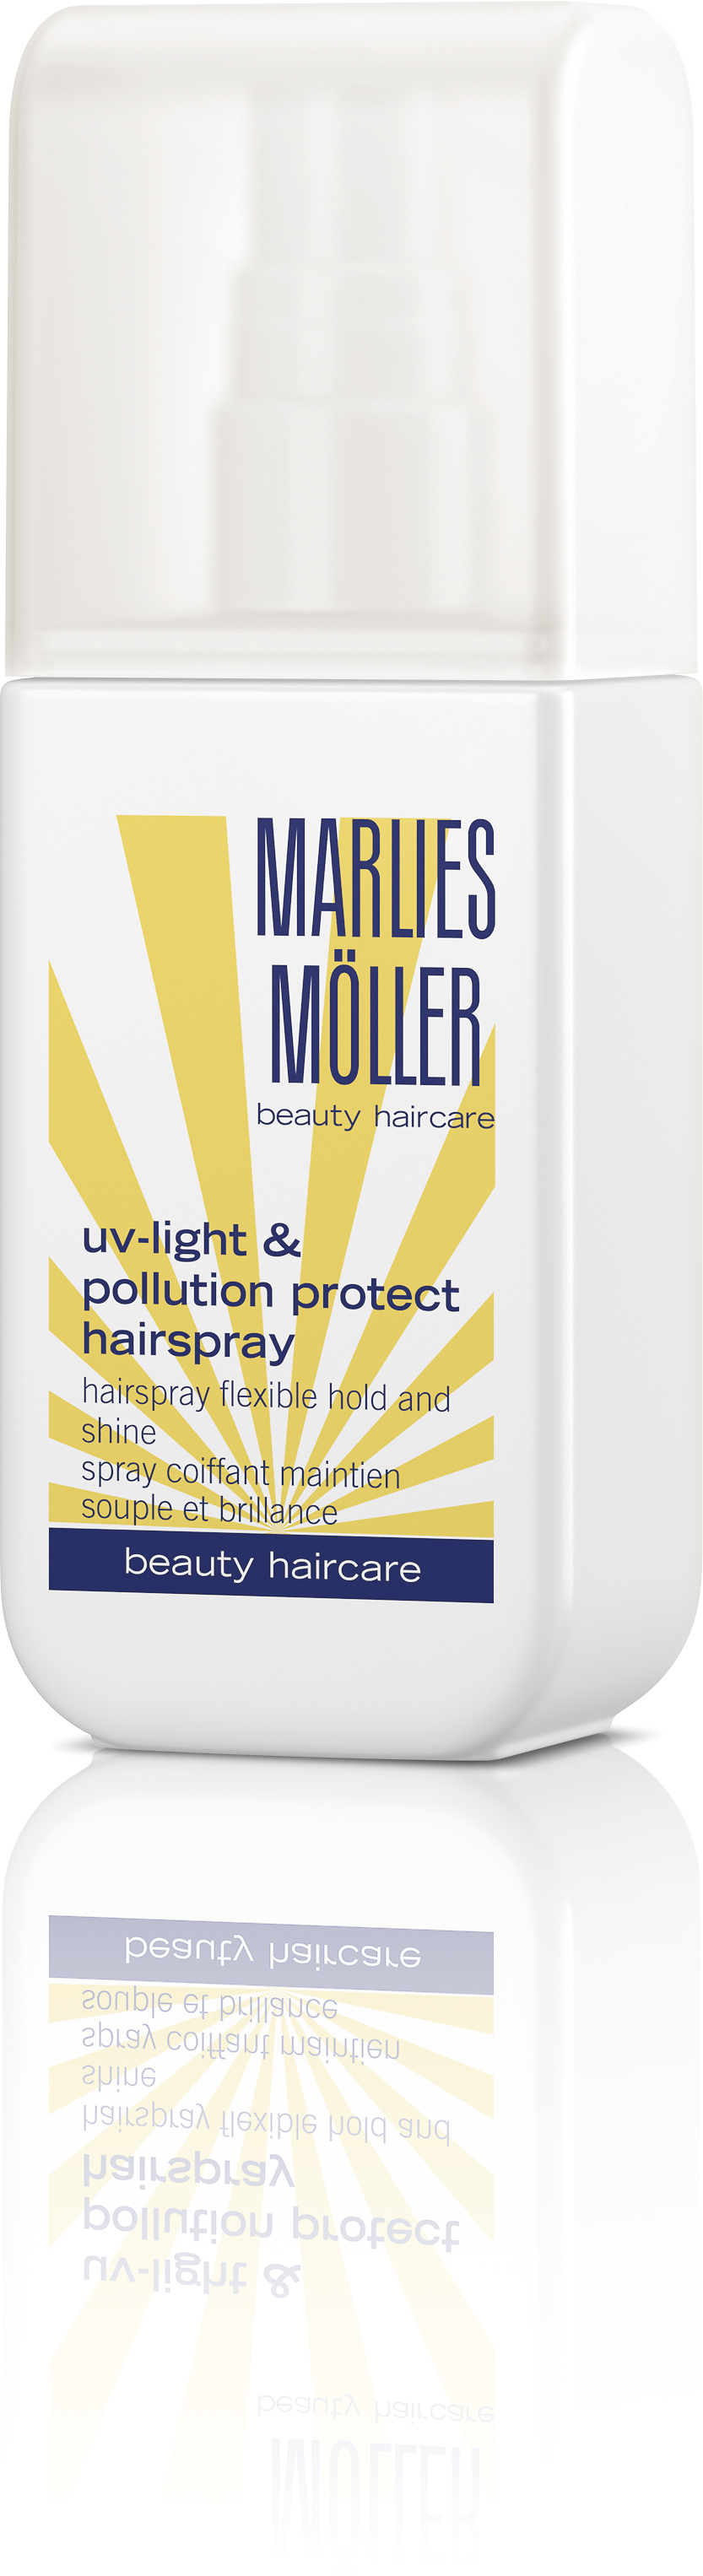 Marlies Möller Care UV Light&Poll Prot Hairspr 125 ml